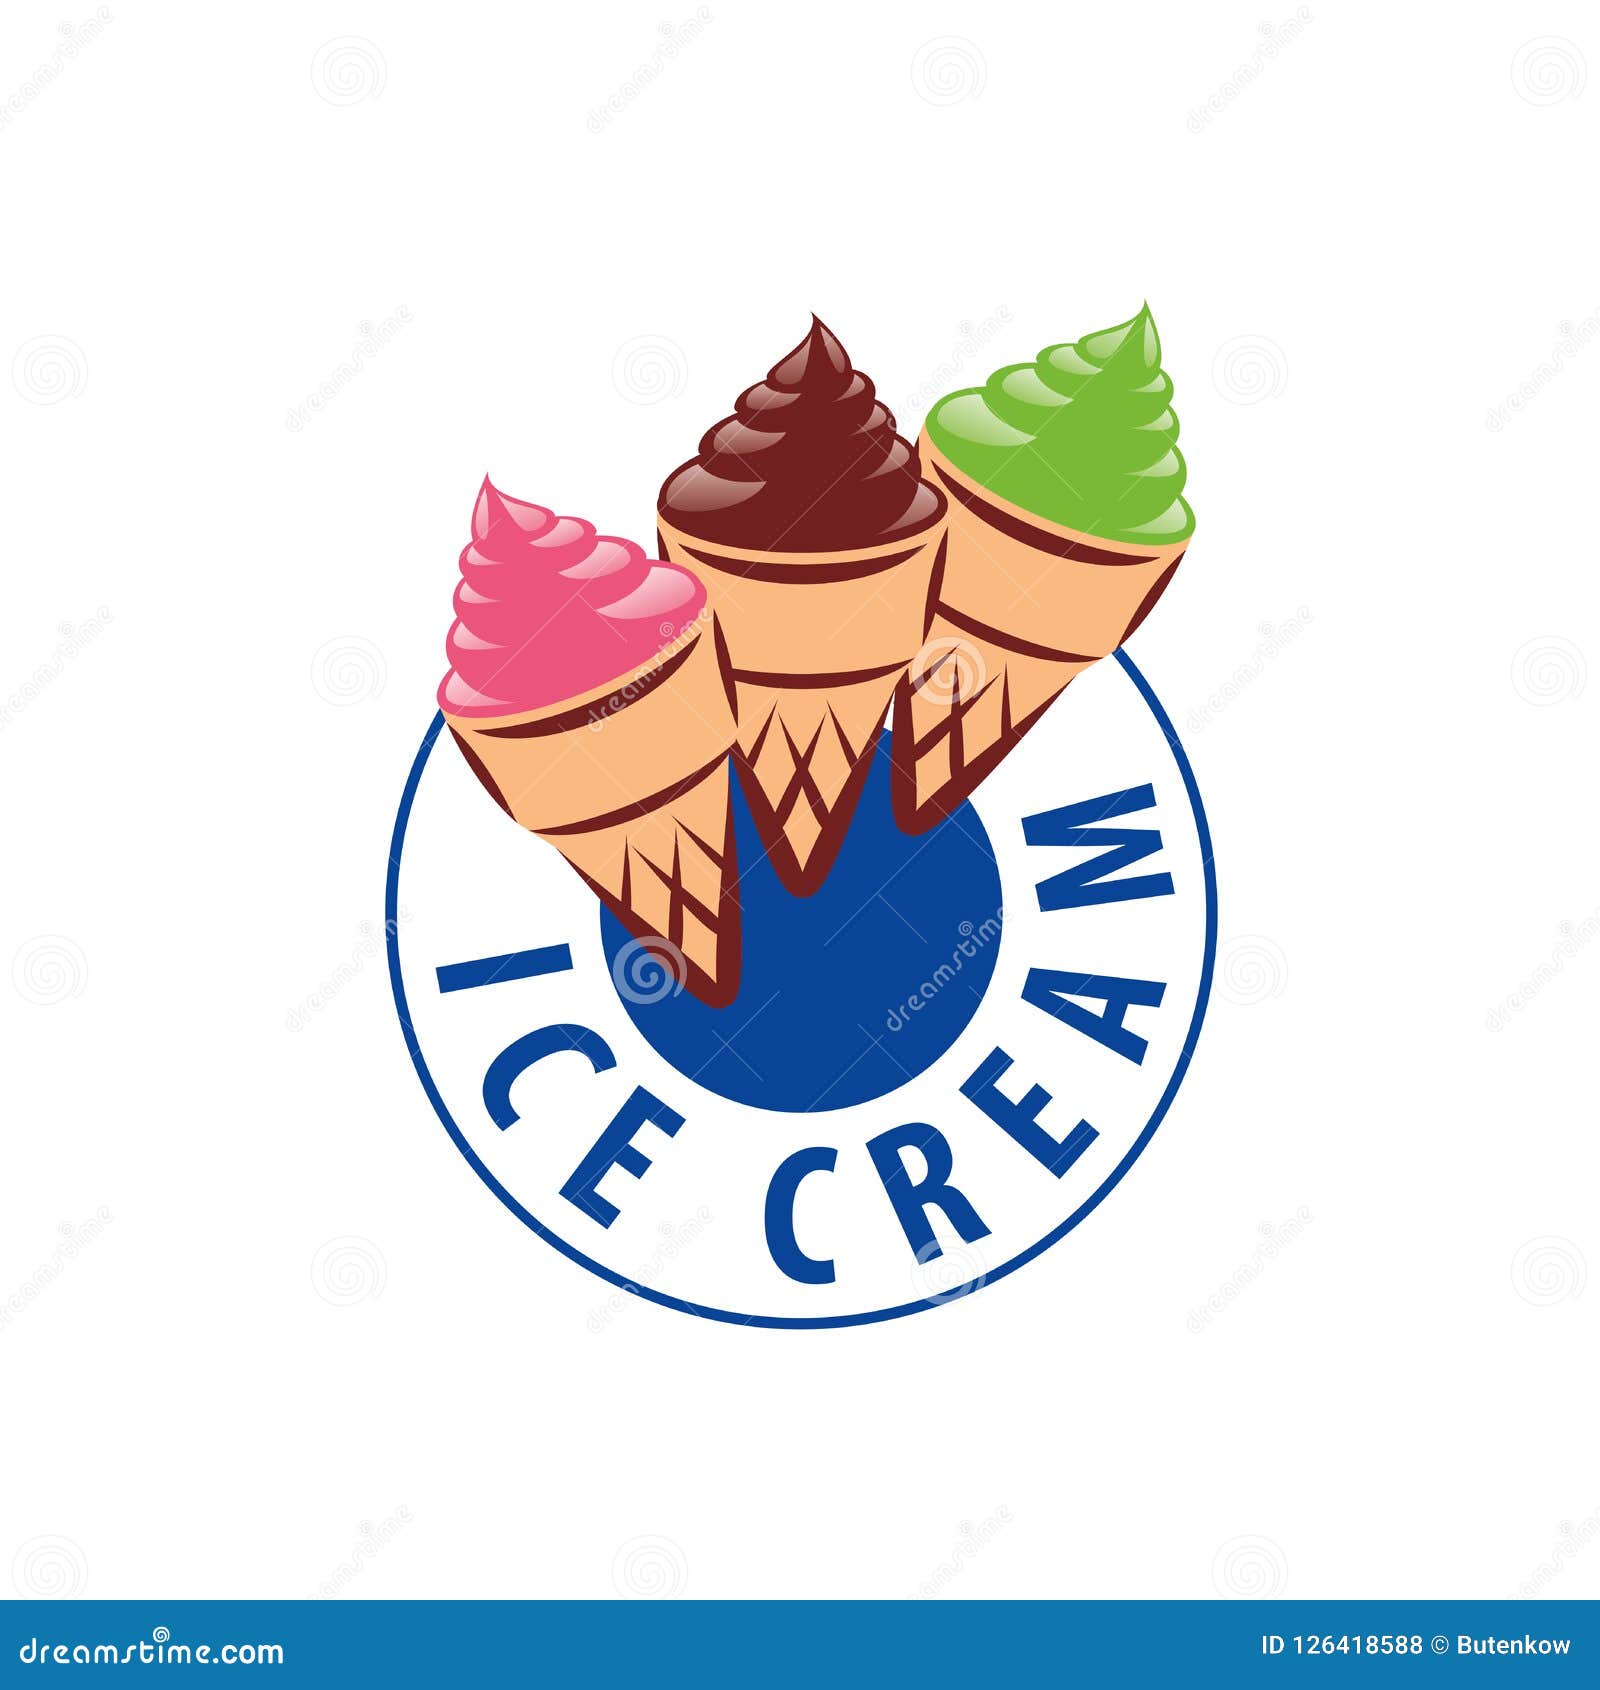 Ice cream simple logo design #346539 - TemplateMonster